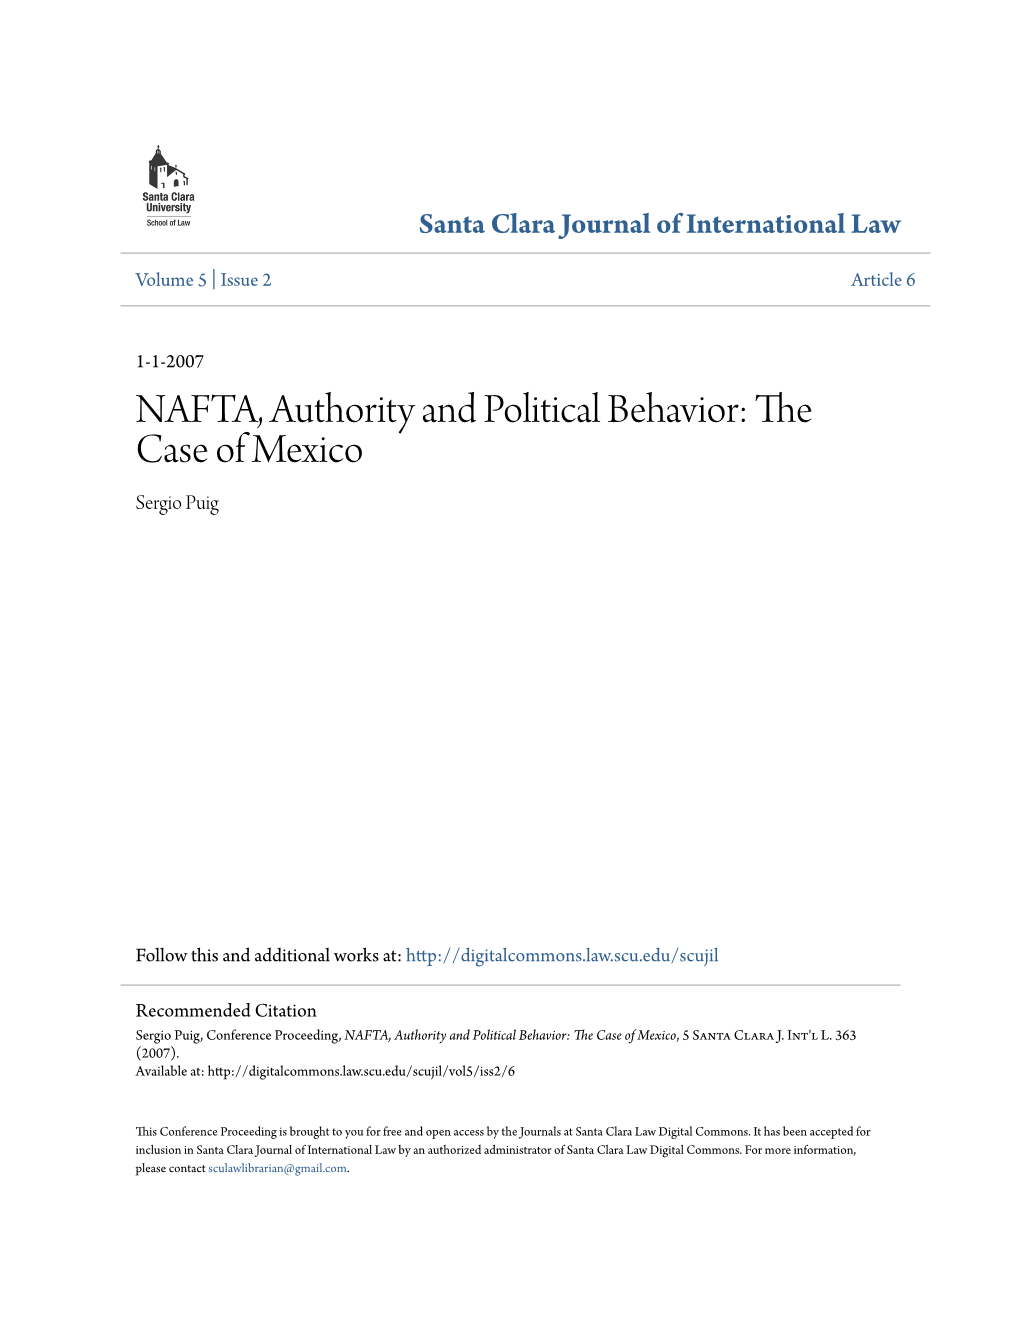 NAFTA, Authority and Political Behavior: the Case of Mexico Sergio Puig